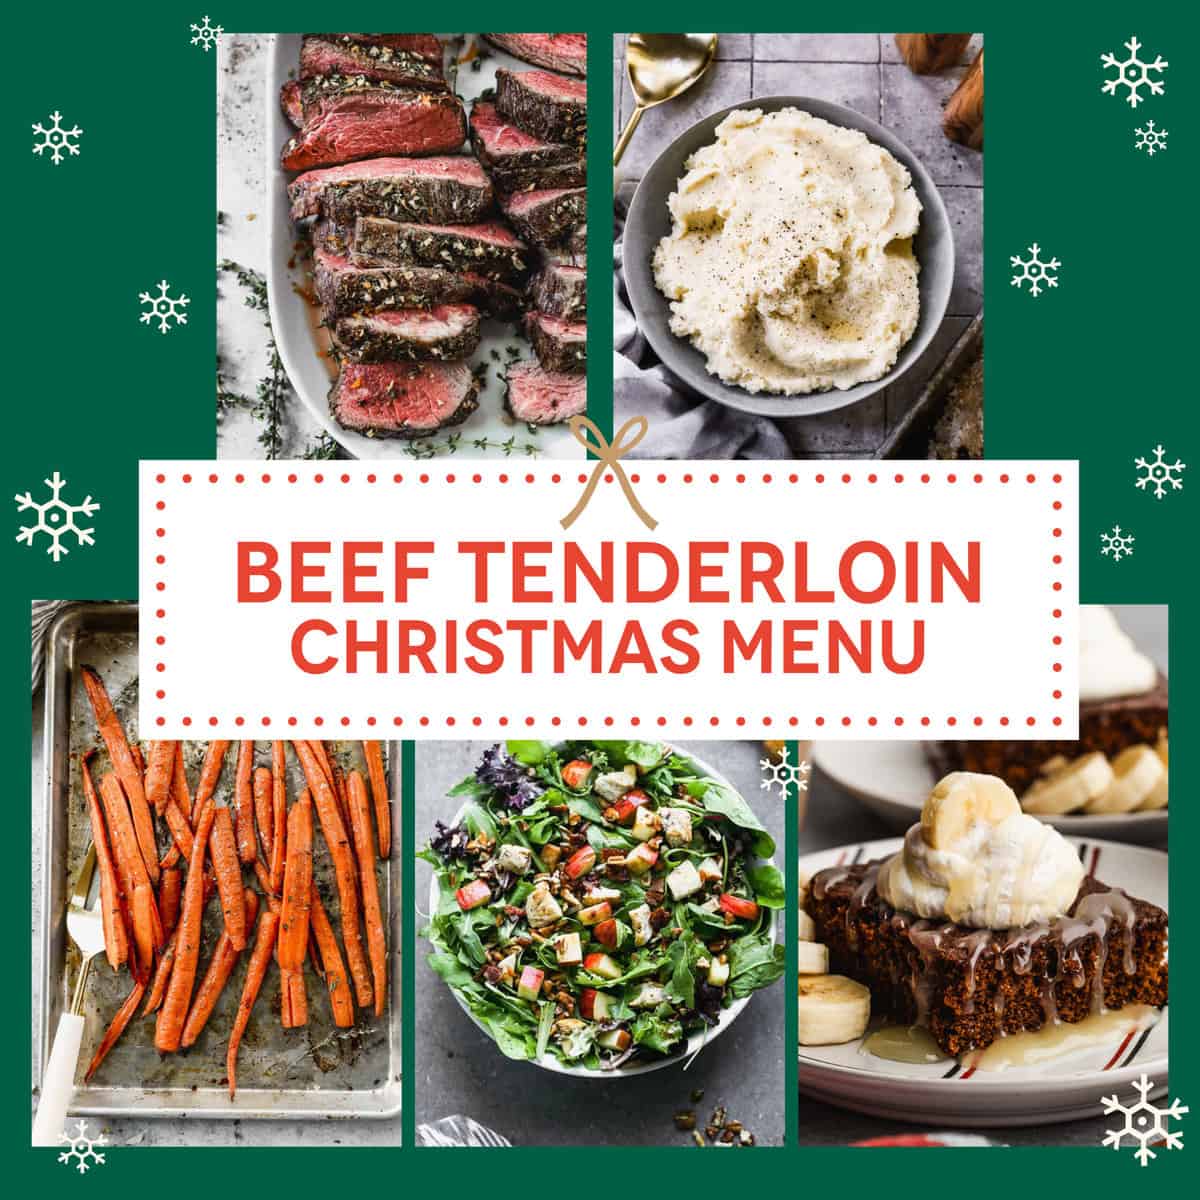 The best Christmas Dinner menu, featuring Beef Tenderloin as the main dish.